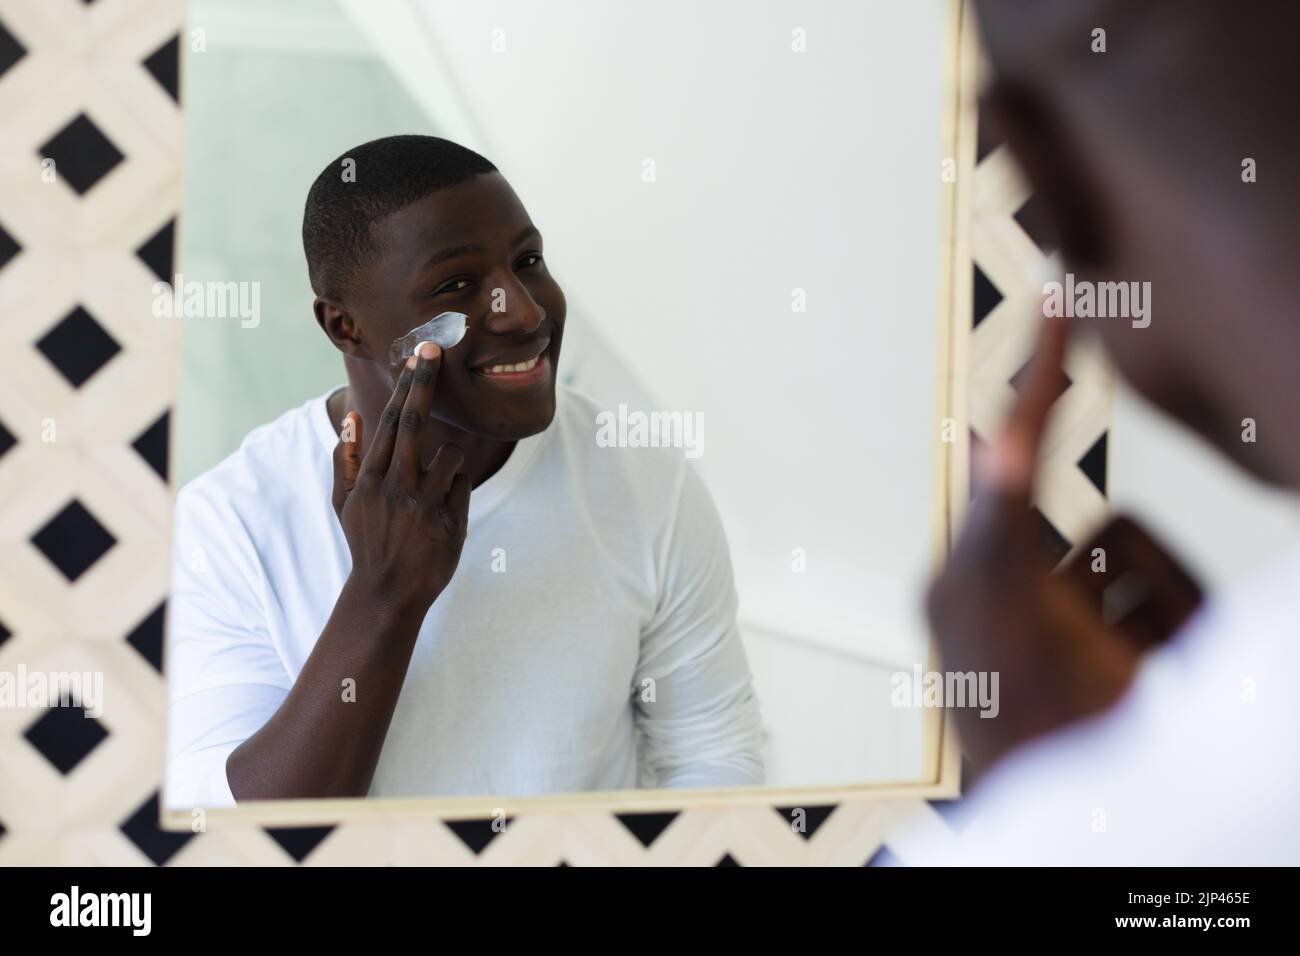 Smiling african american man applying face moisturiser looking in bathroom mirror Stock Photo